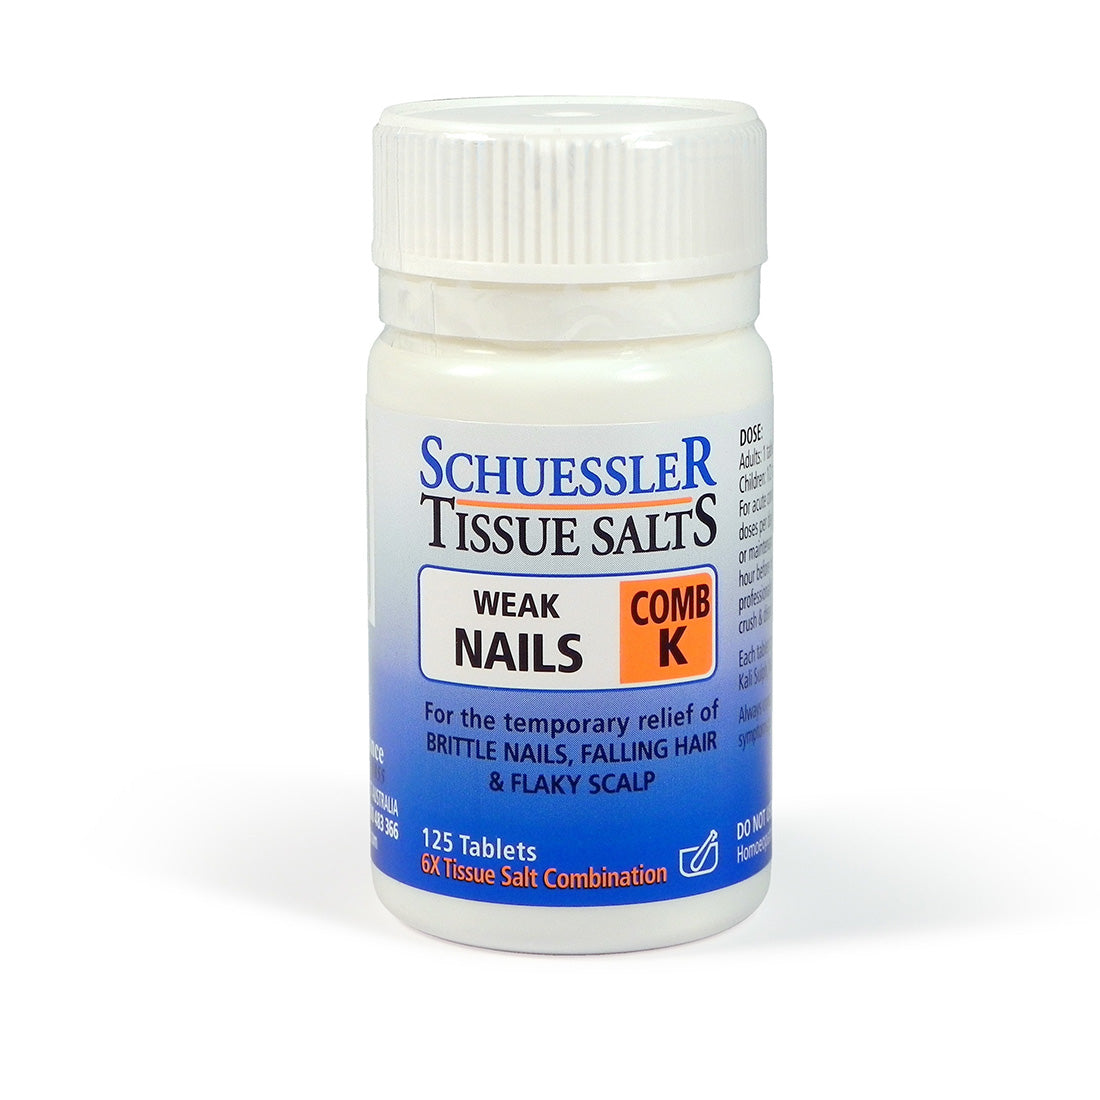 Martin & Pleasance Schuessler Tissue Salts Comb K 125 Tablets, Weak Nails